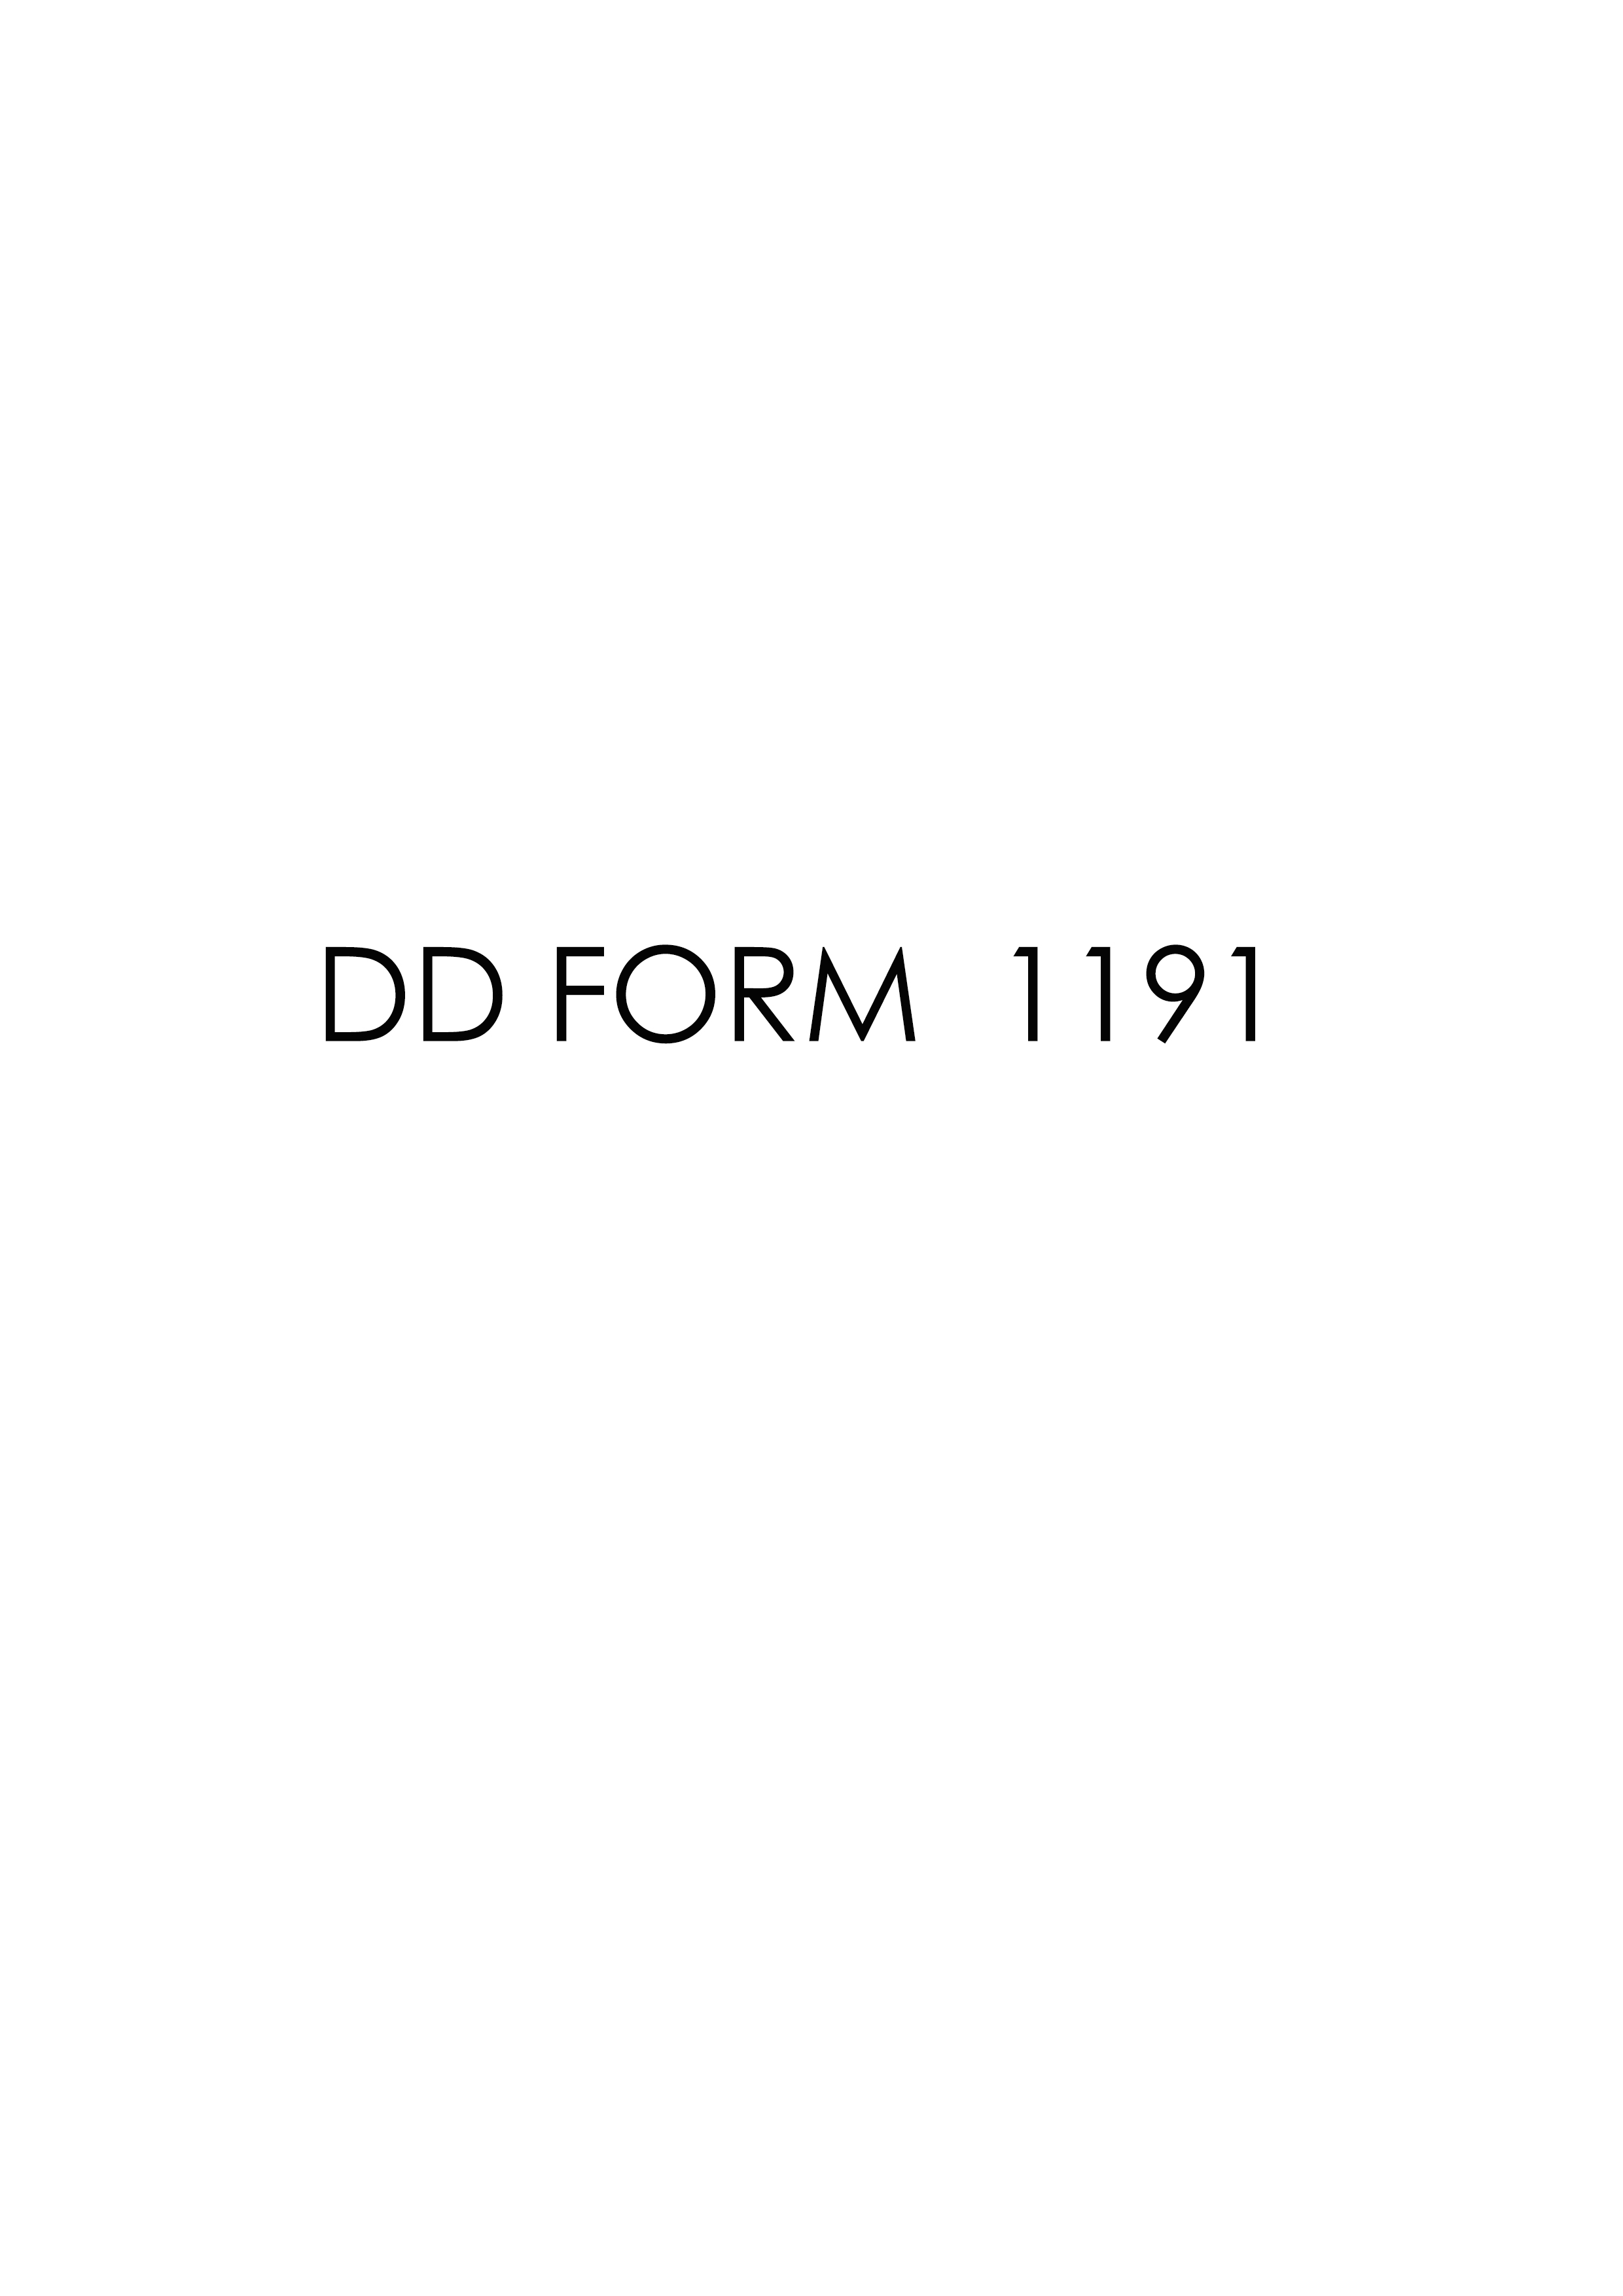 Download dd Form 1191